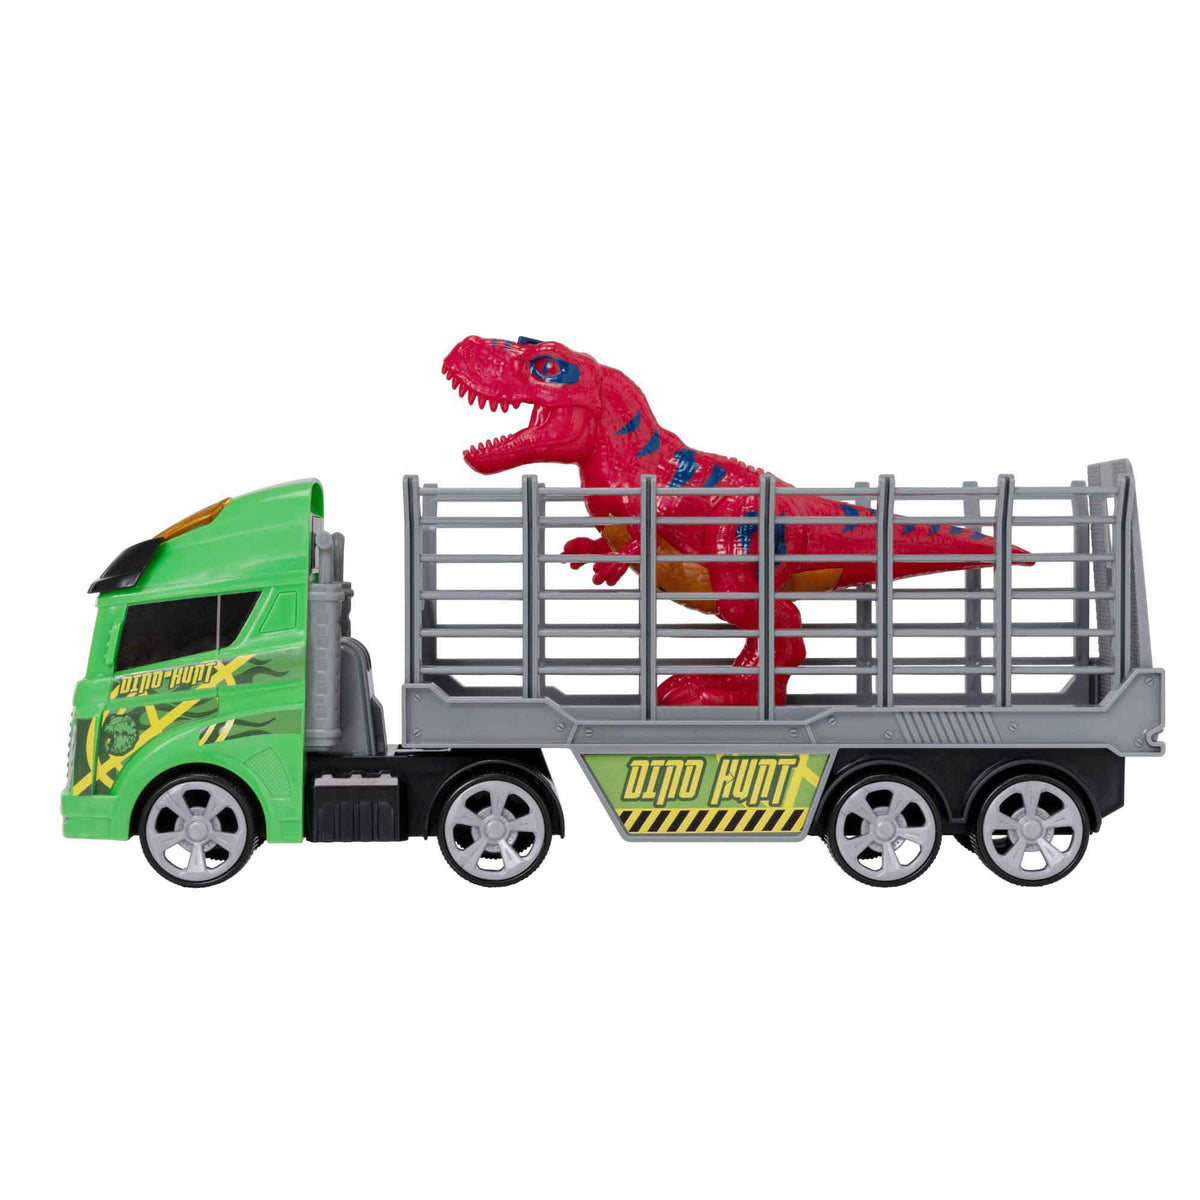 Teamsterz Monster Moverz Dinosaur Transporter